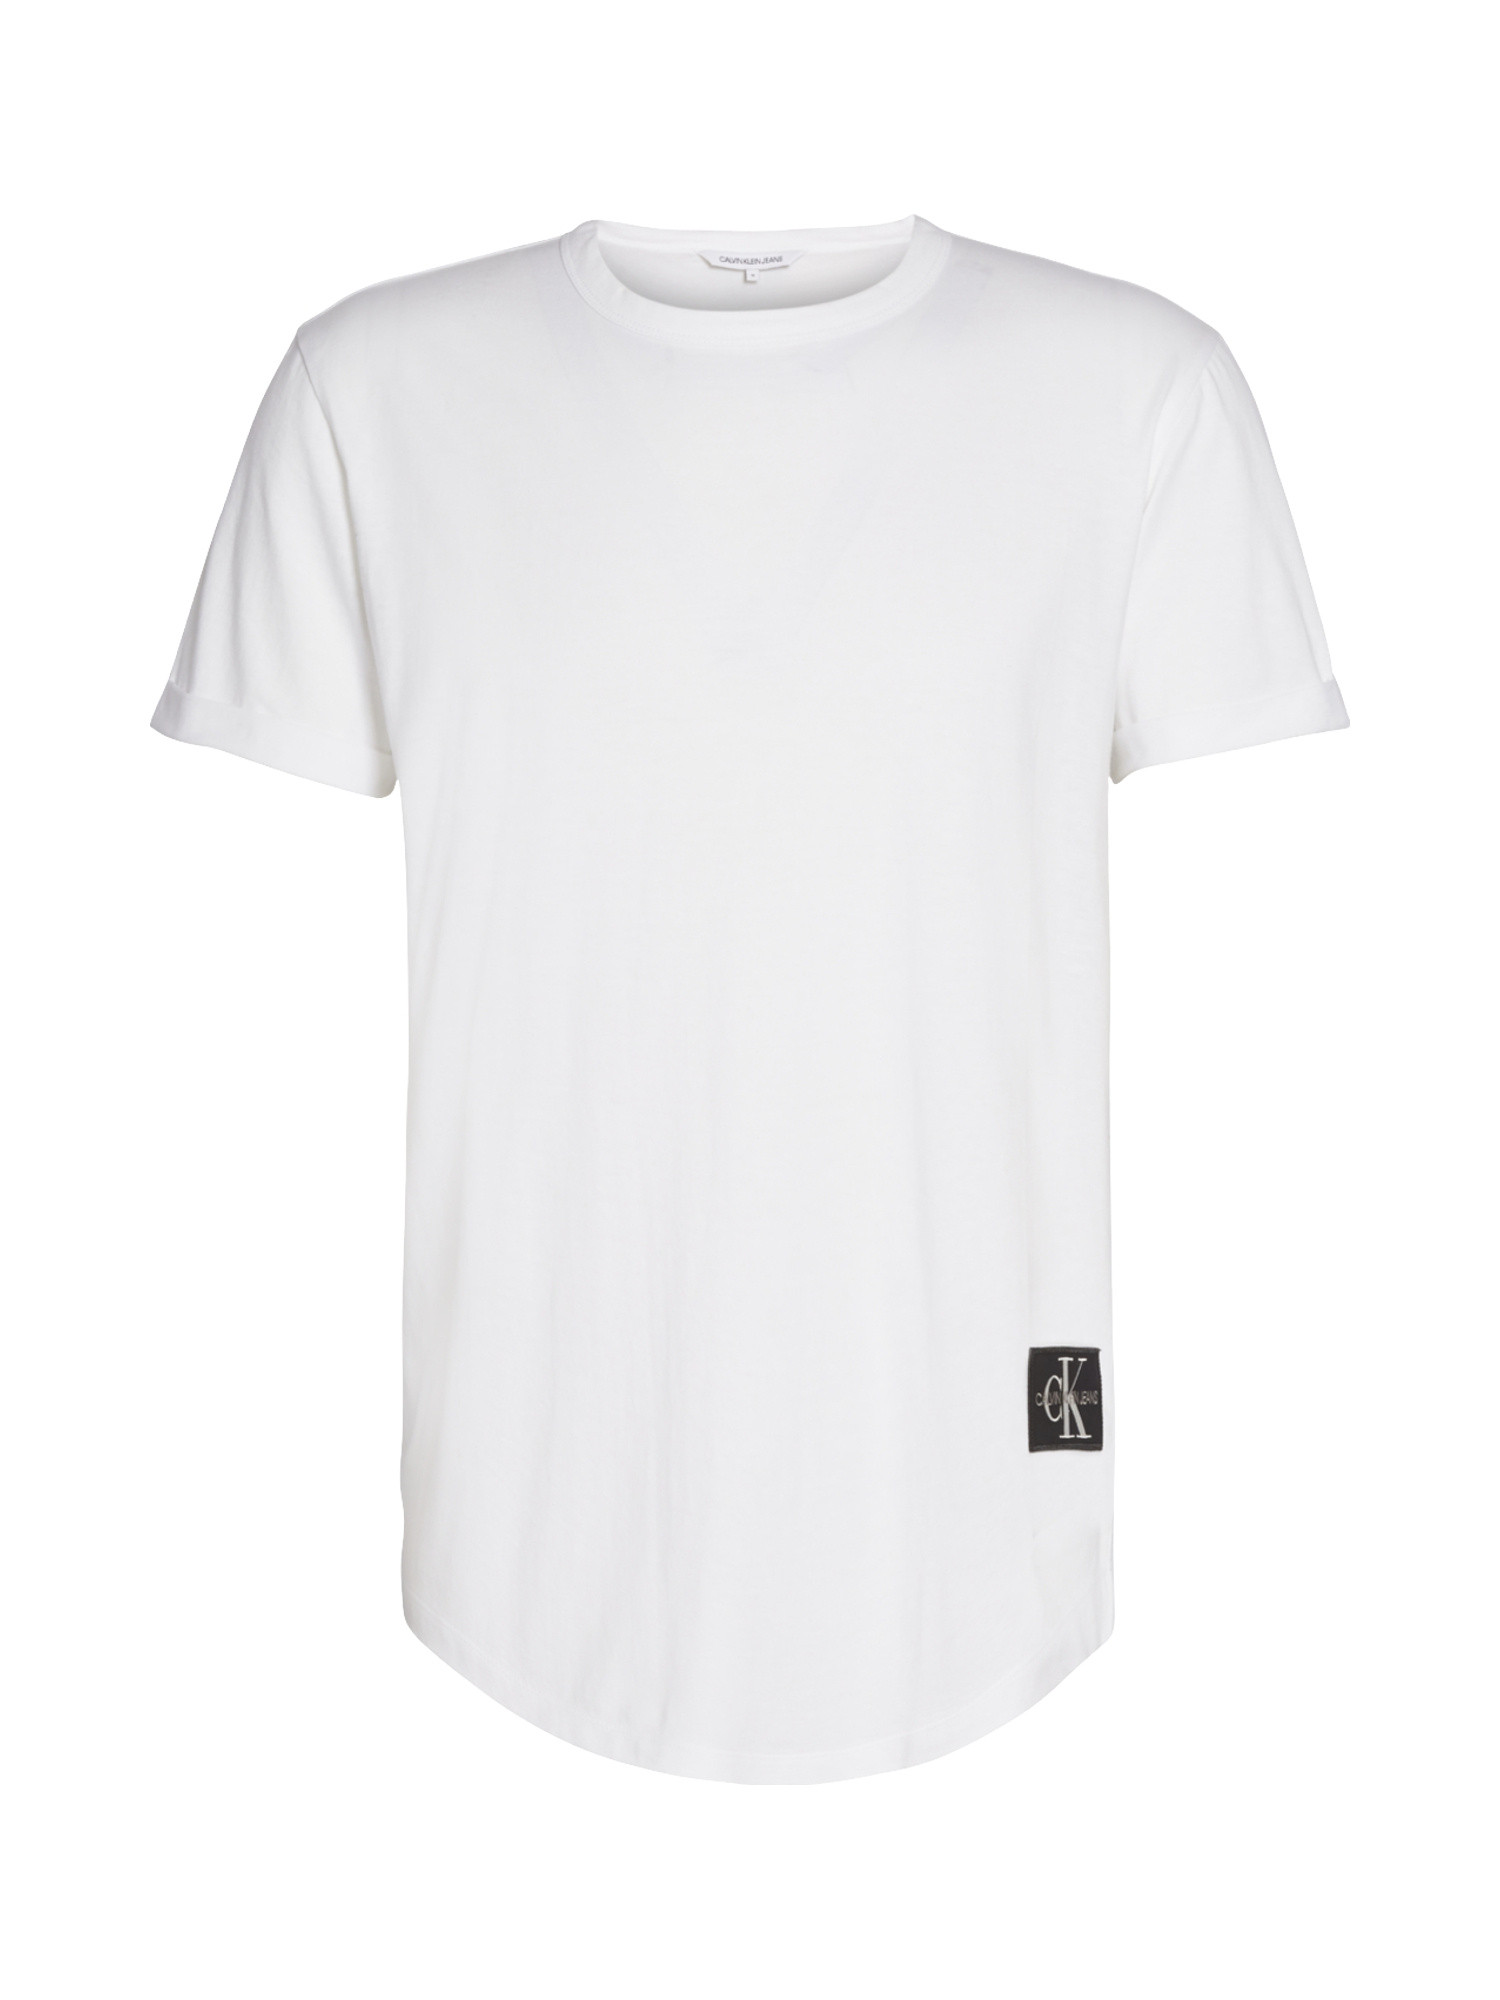 T-shirt con logo, Bianco, large image number 0